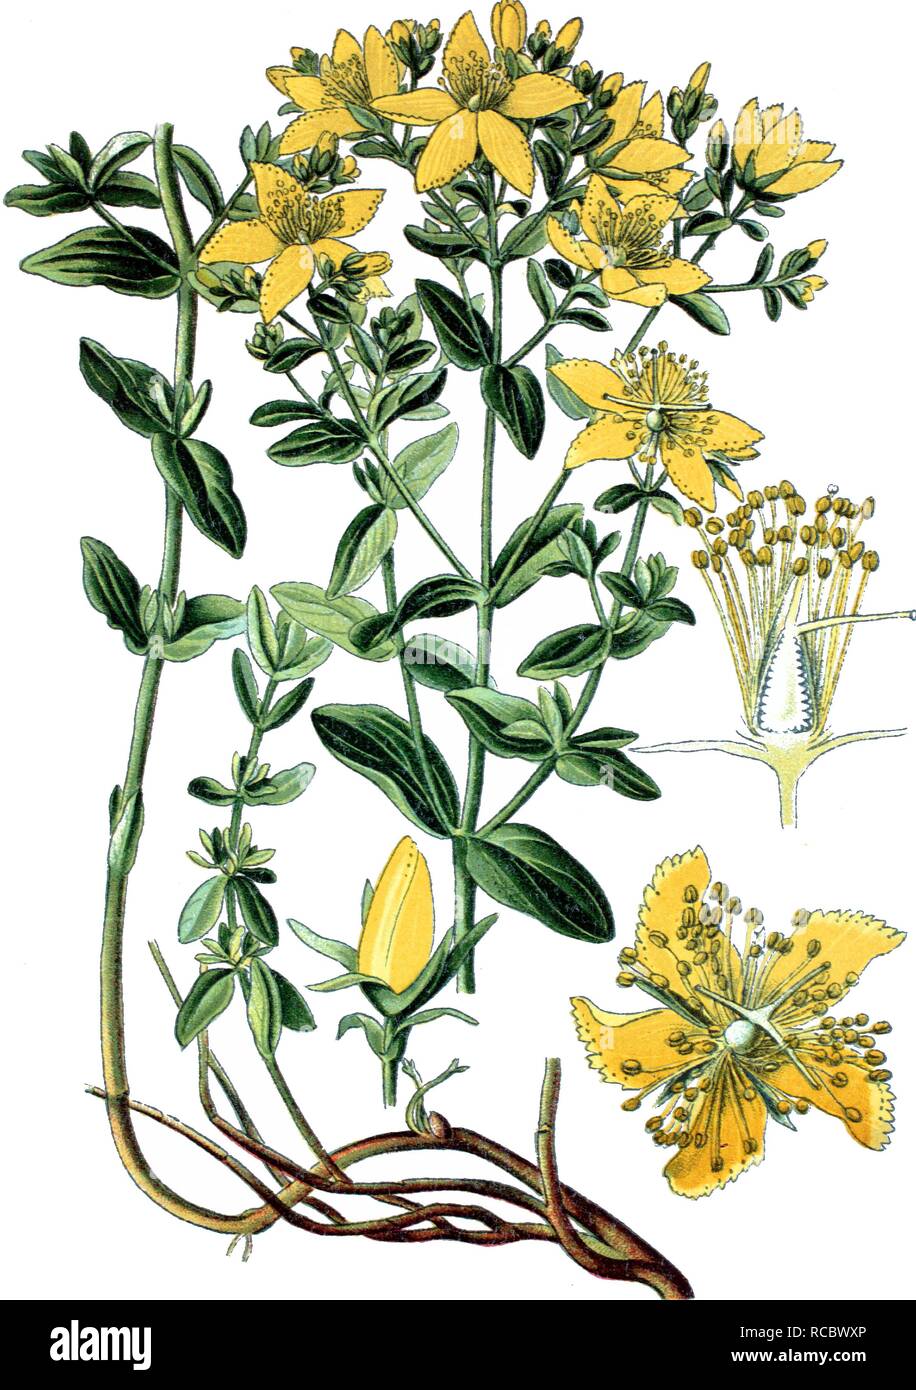 St. John's Wort (Hypericum perforatum), a medicinal plant, historical chromolithography, ca. 1870 Stock Photo